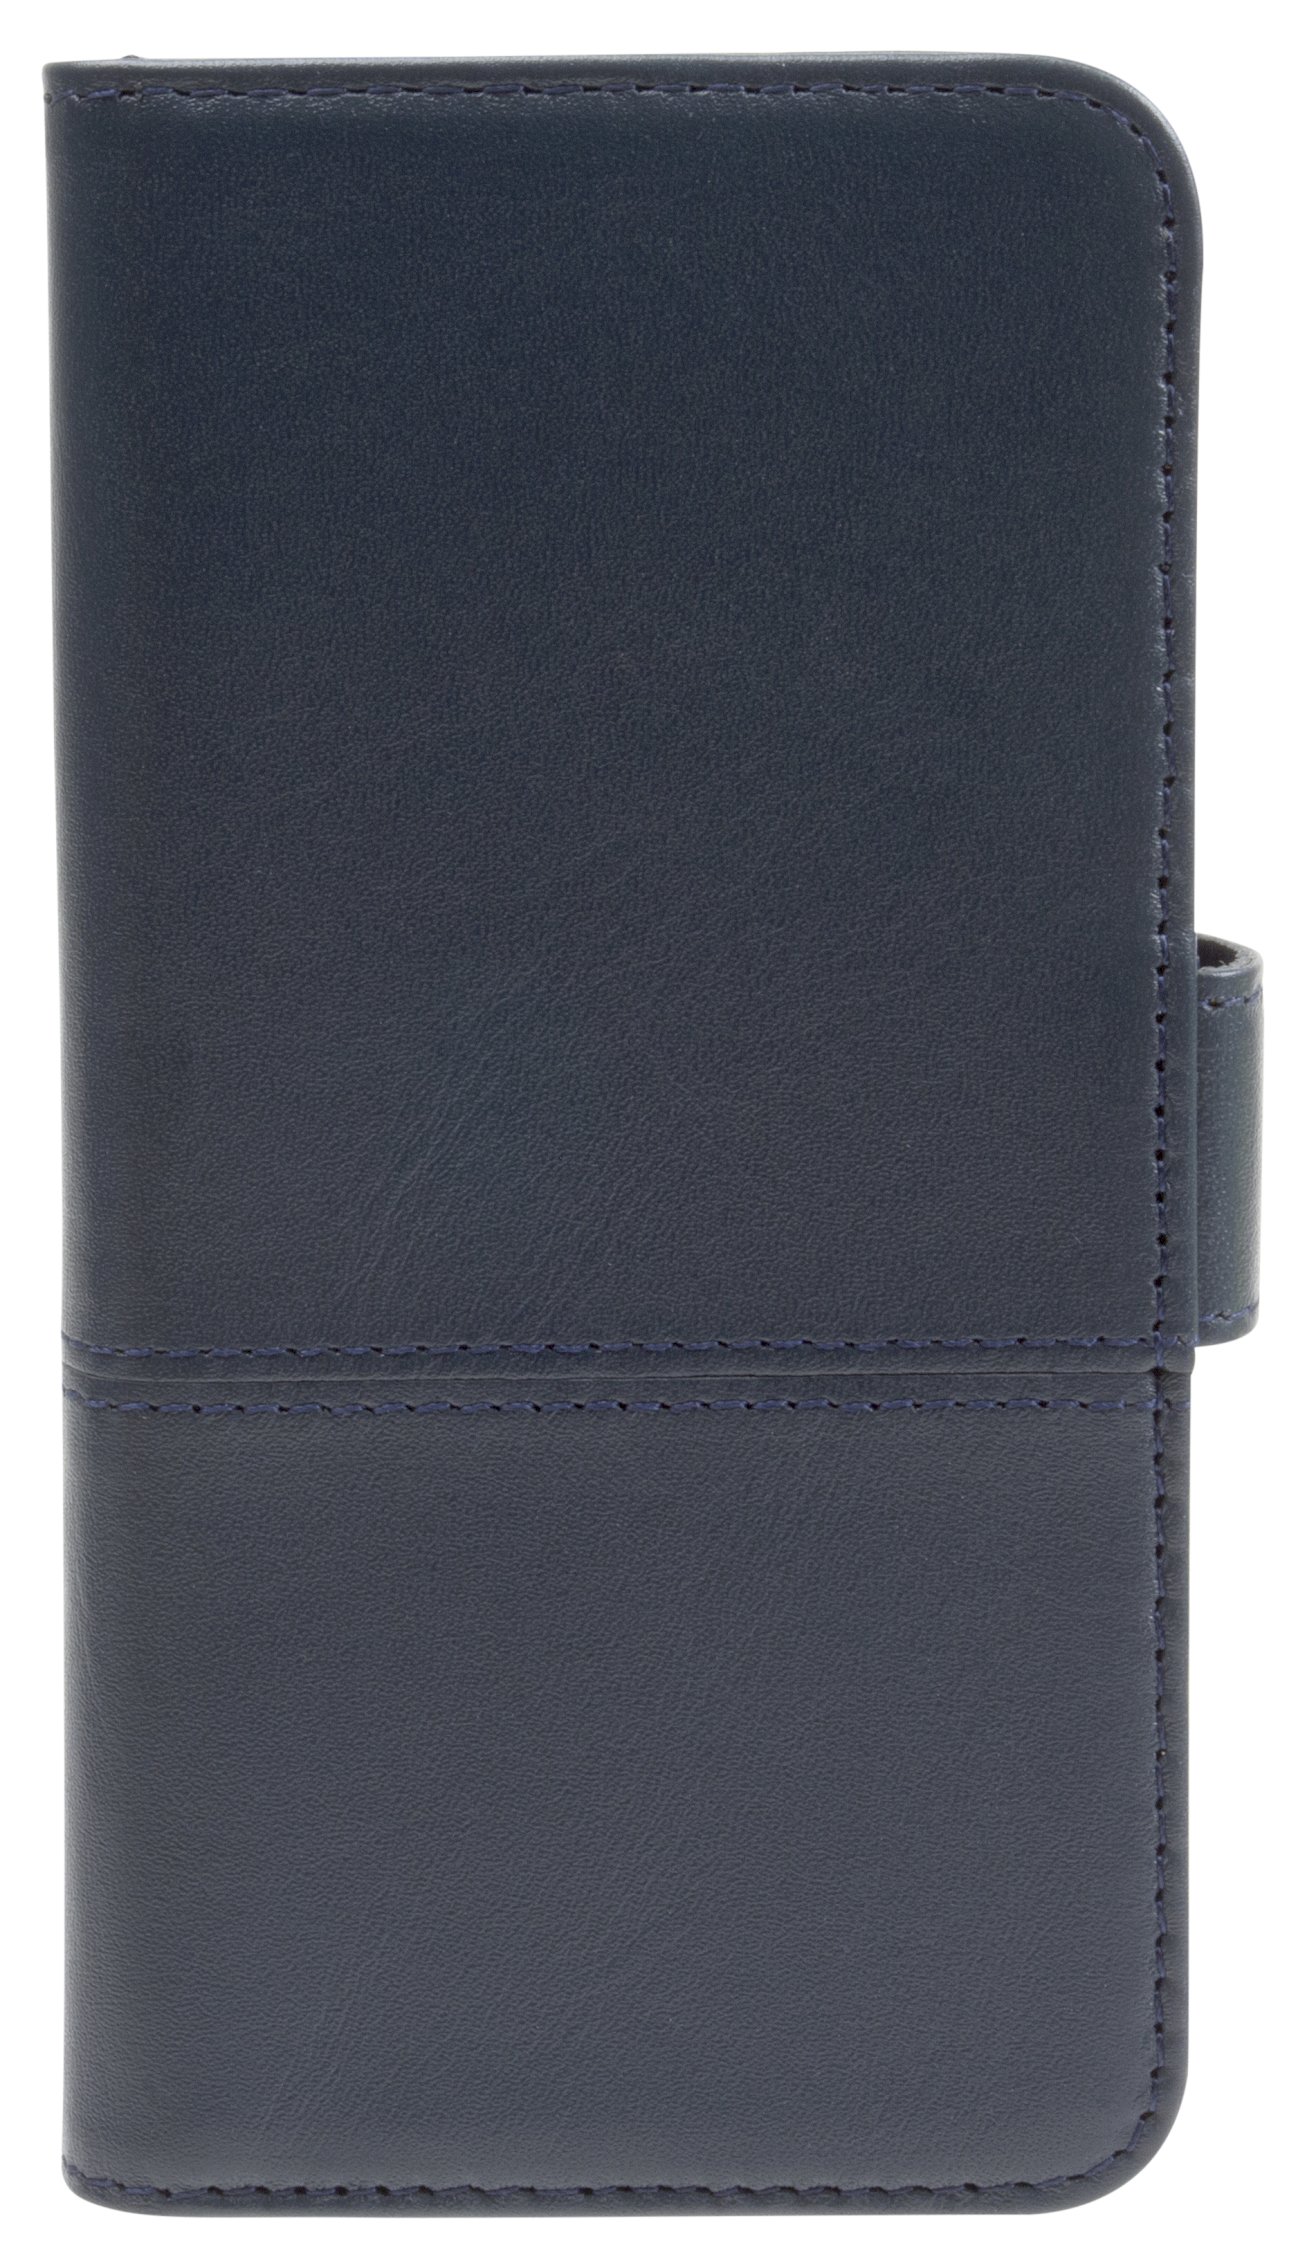 iPhone 6s/6, selected wallet leder, blauw